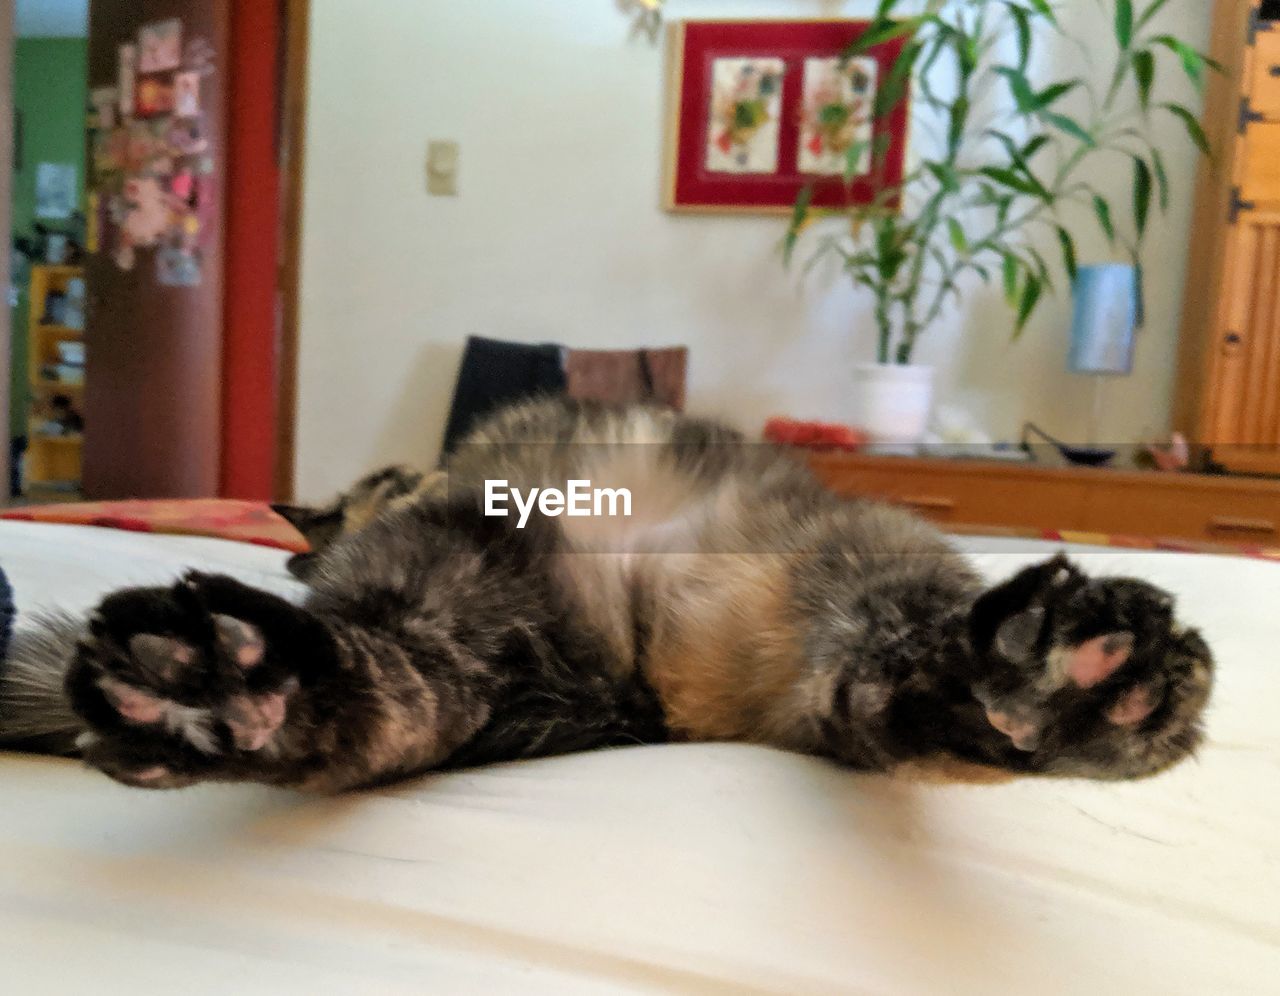 PORTRAIT OF CAT SLEEPING ON BED